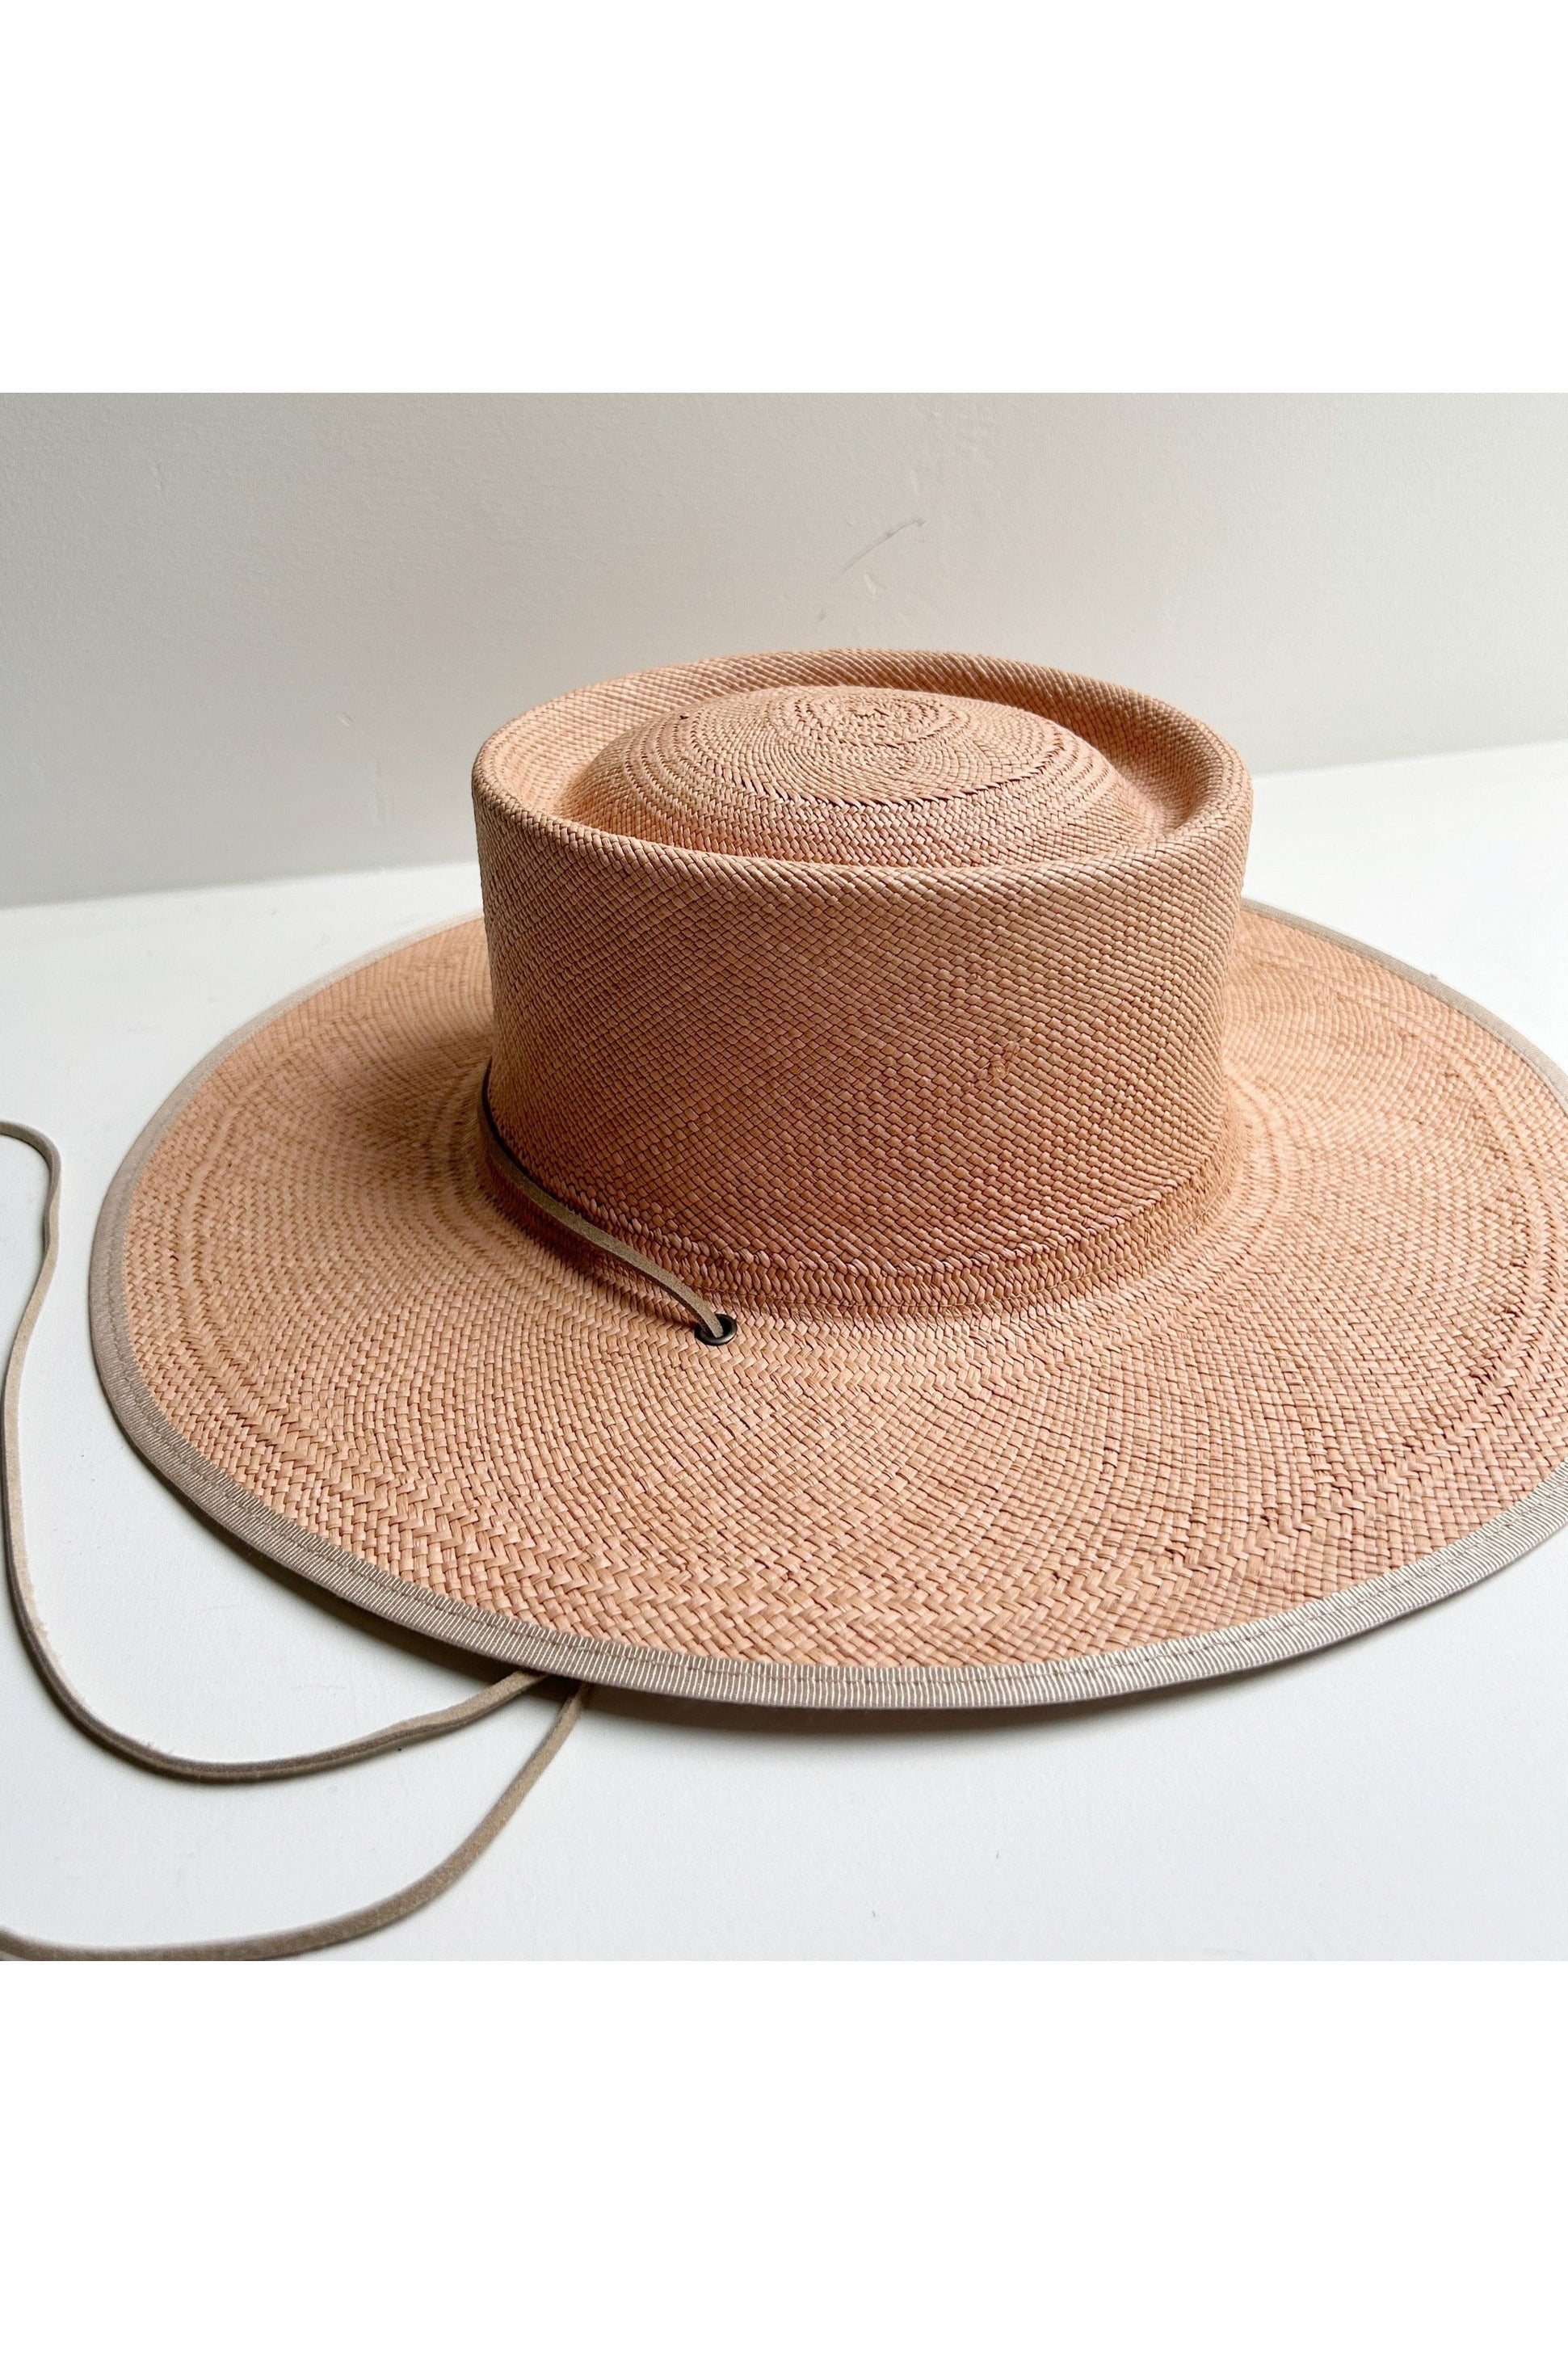 Alderman Sun Hat in Panama Straw Accessories Brookes Boswell   